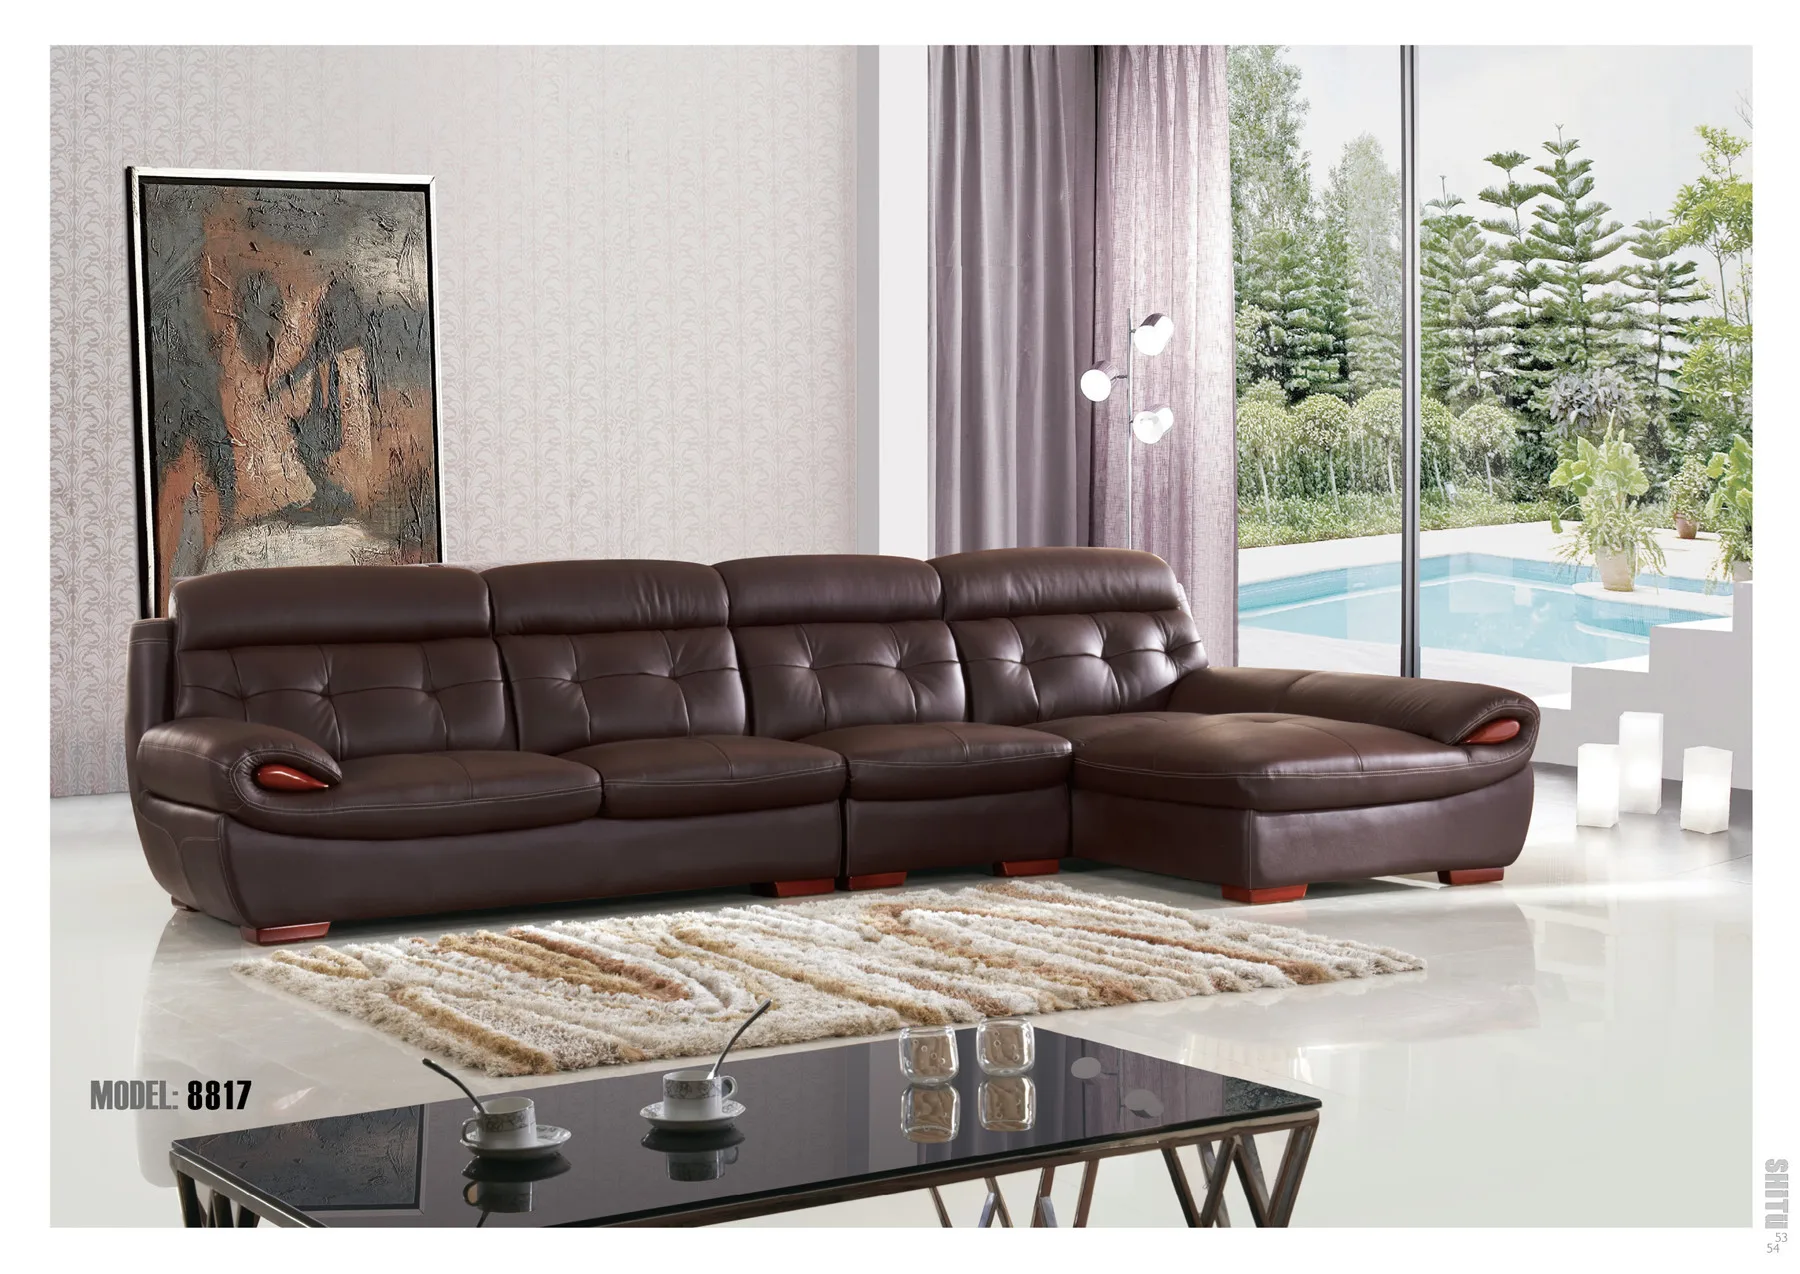 Modern Lazy Boy Leather Sofa Recliner - Buy Lazy Boy Leather Recliner ...